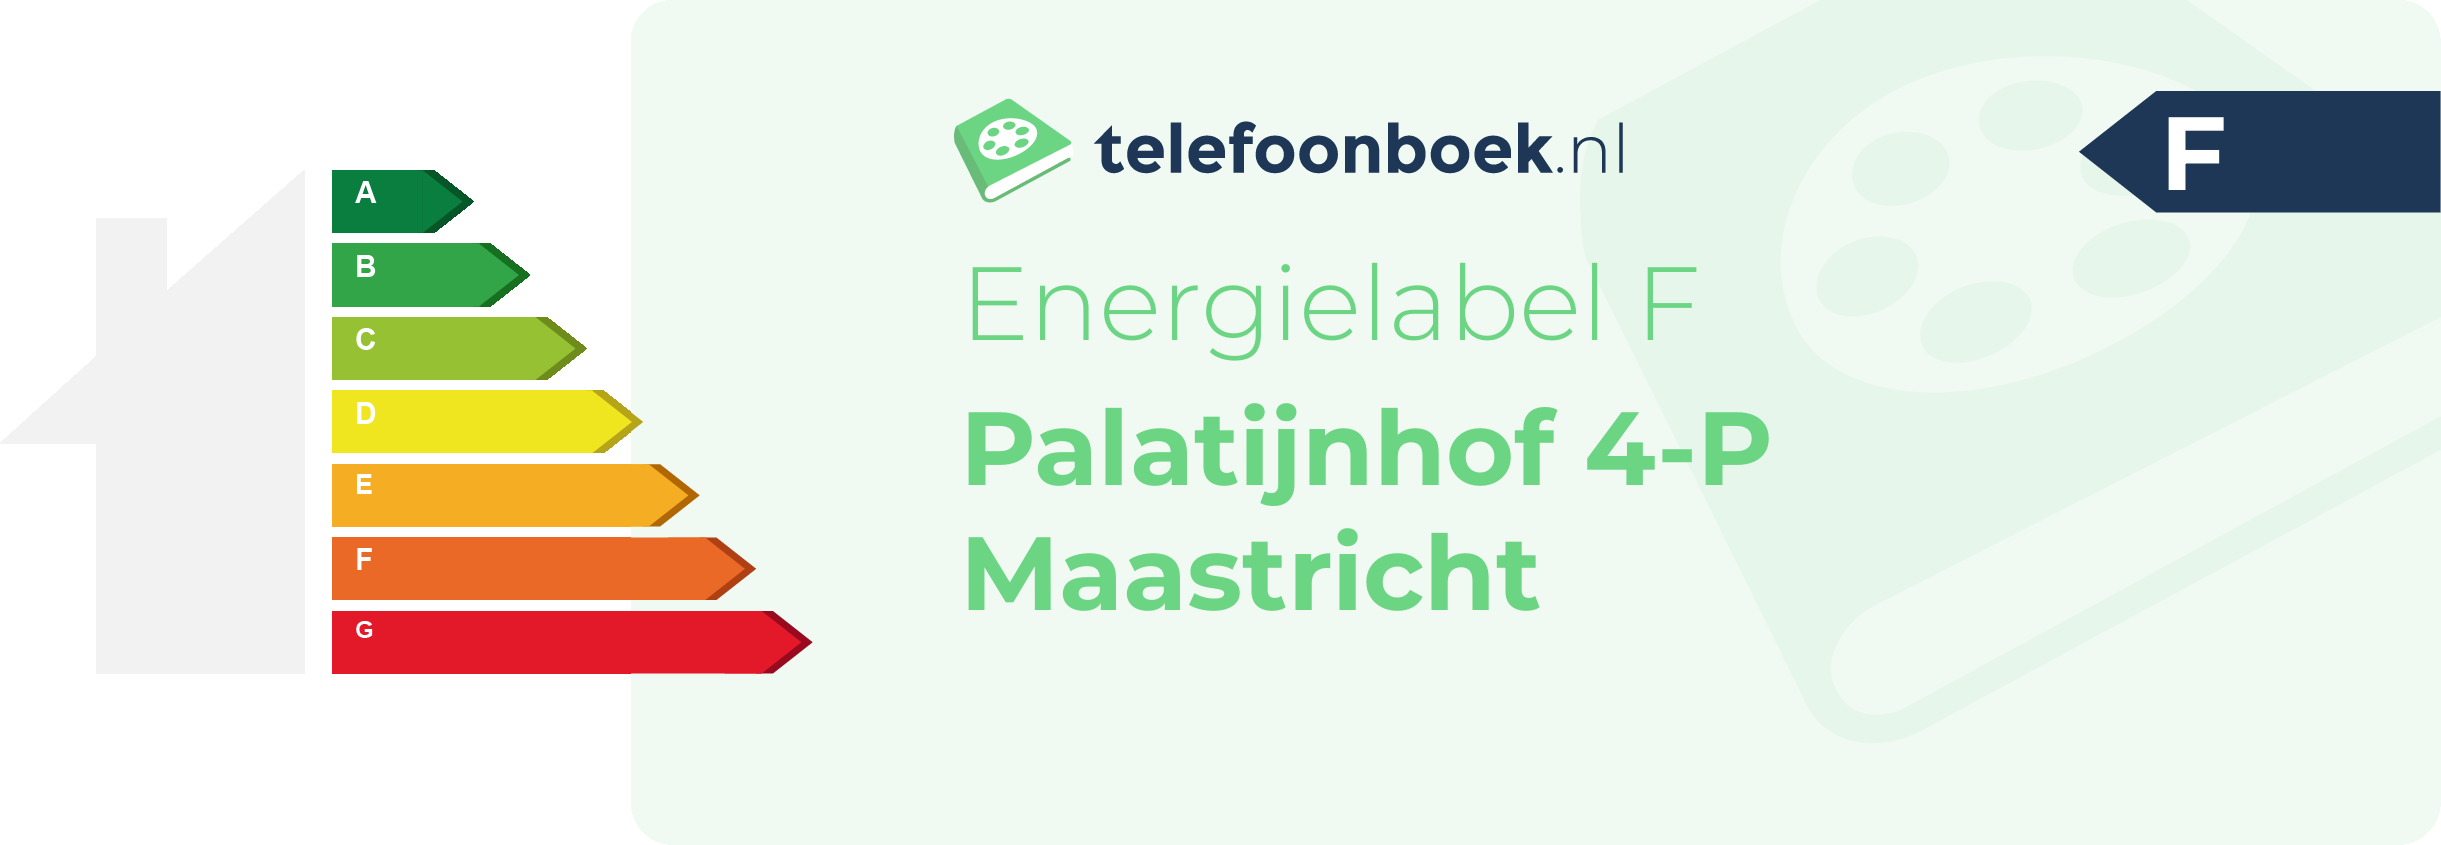 Energielabel Palatijnhof 4-P Maastricht